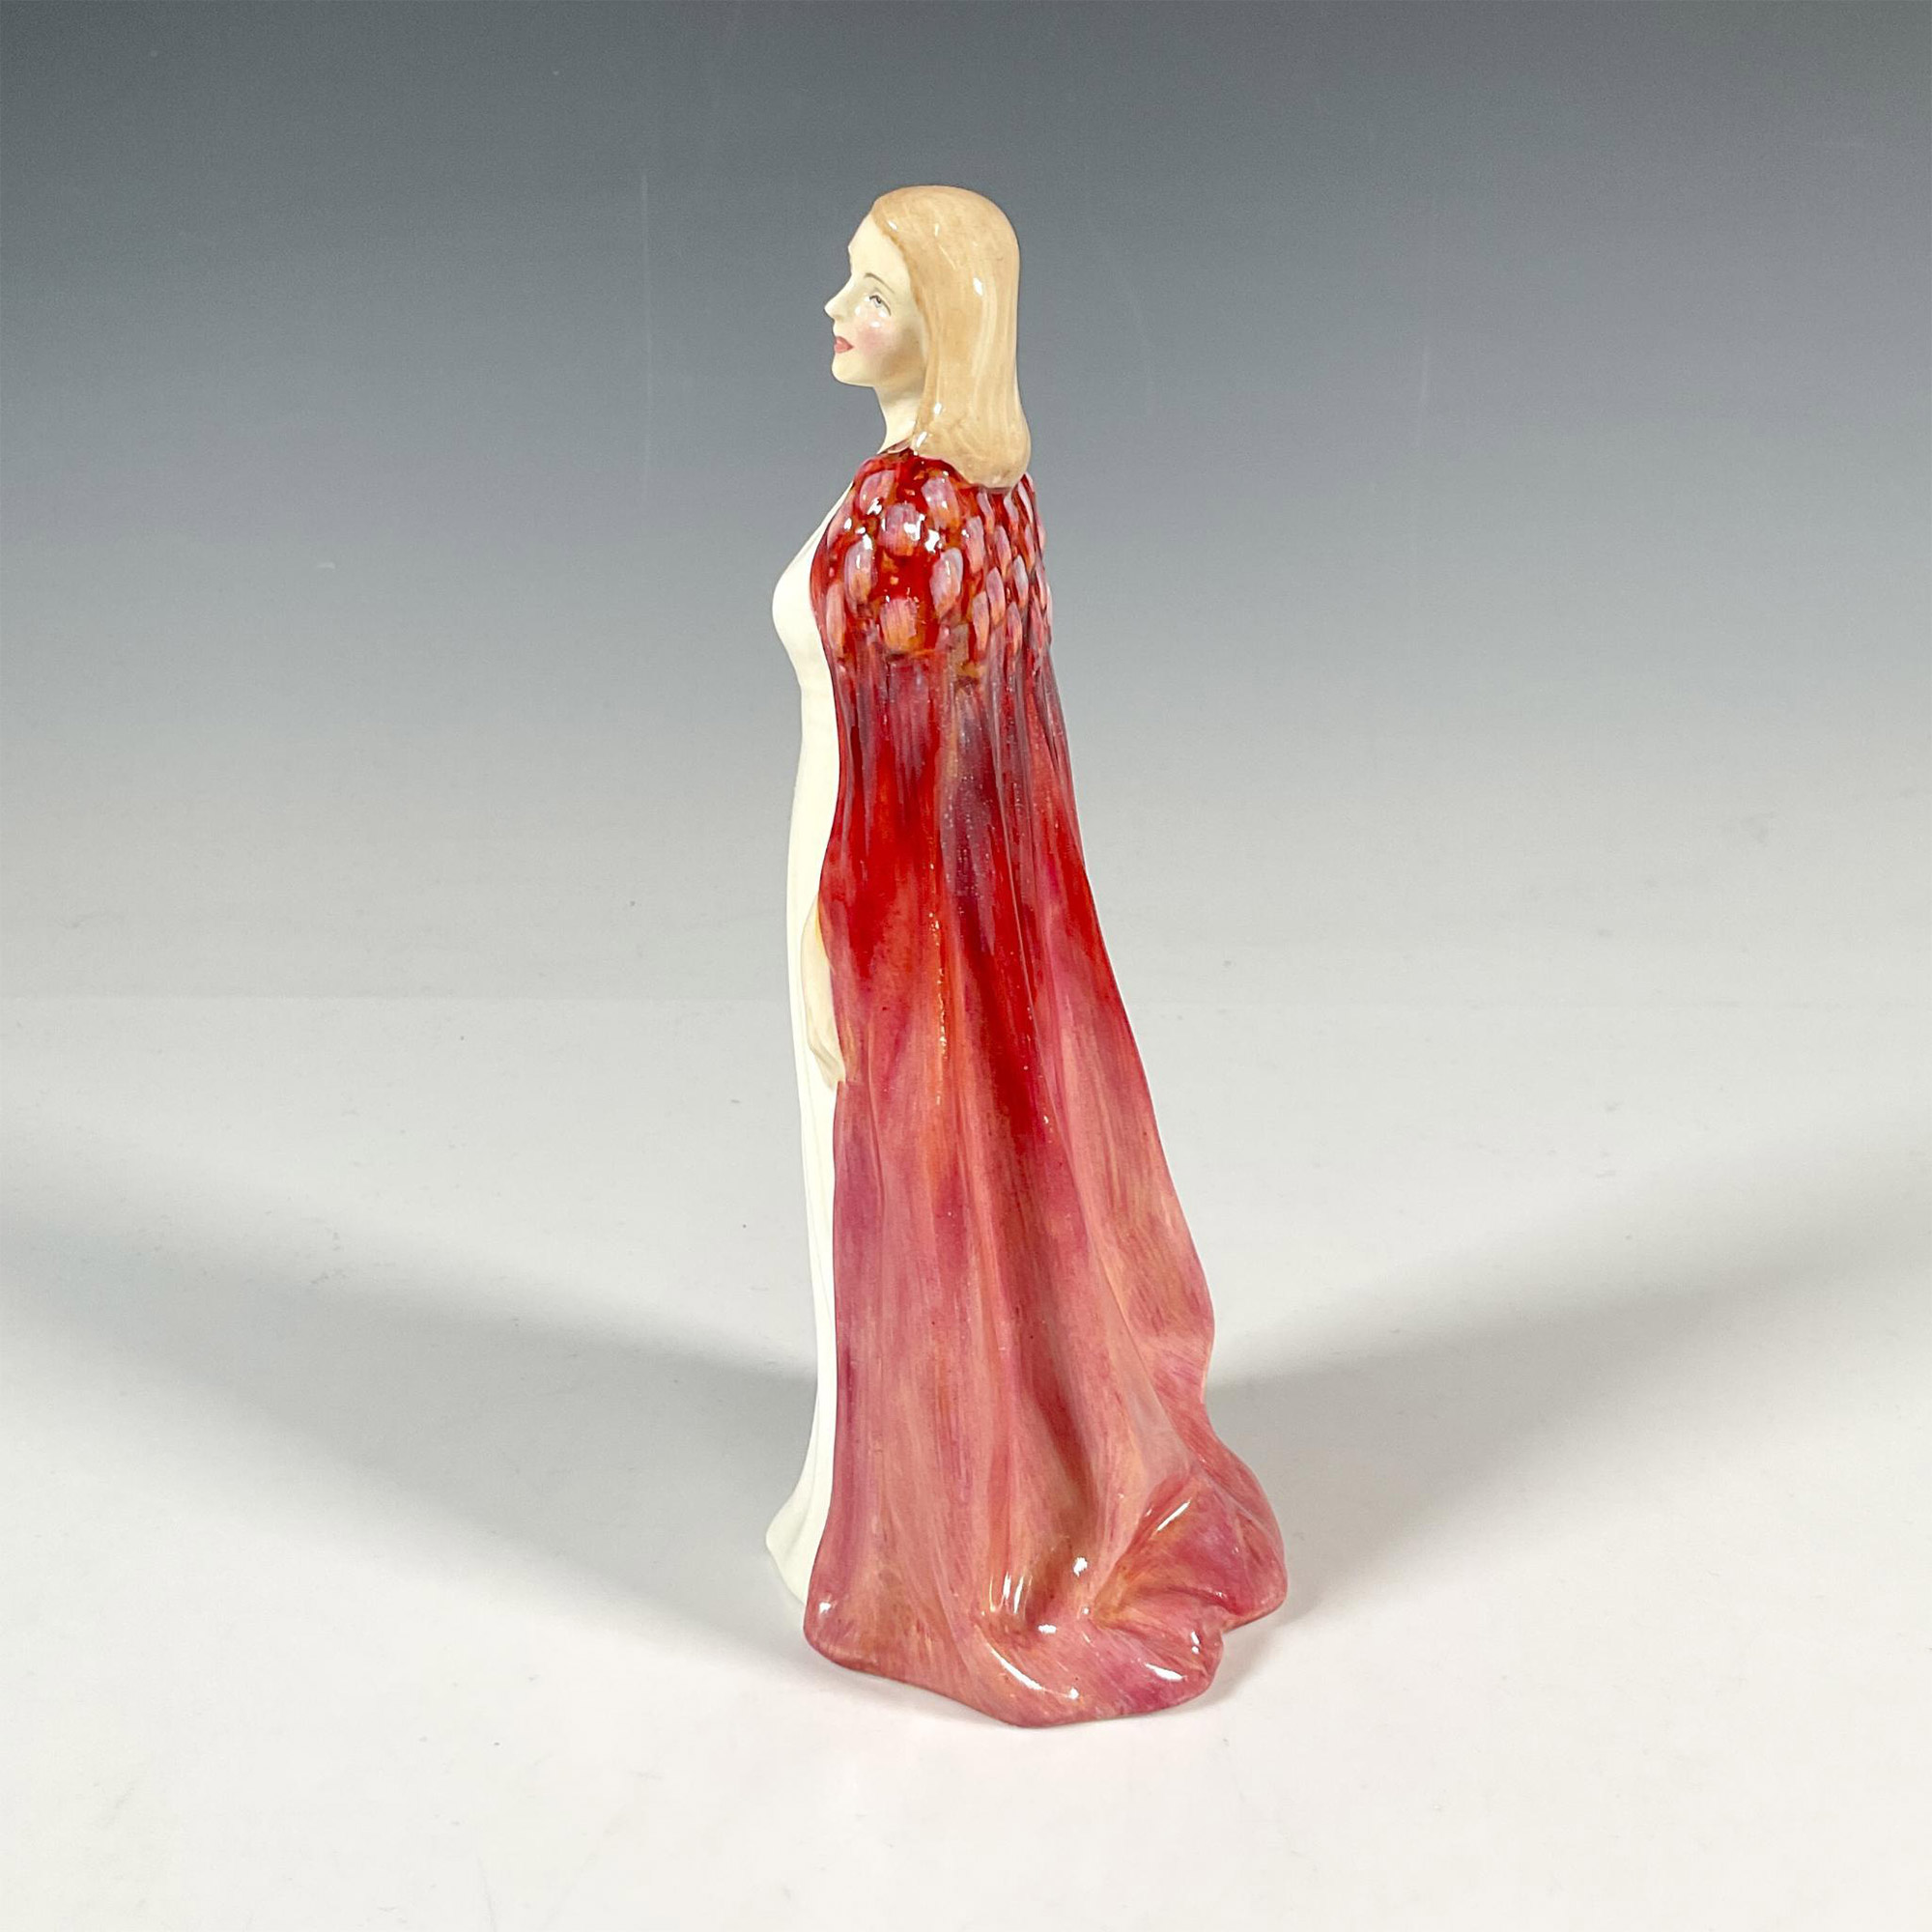 Collinette HN1999 - Royal Doulton Figurine - Image 2 of 5